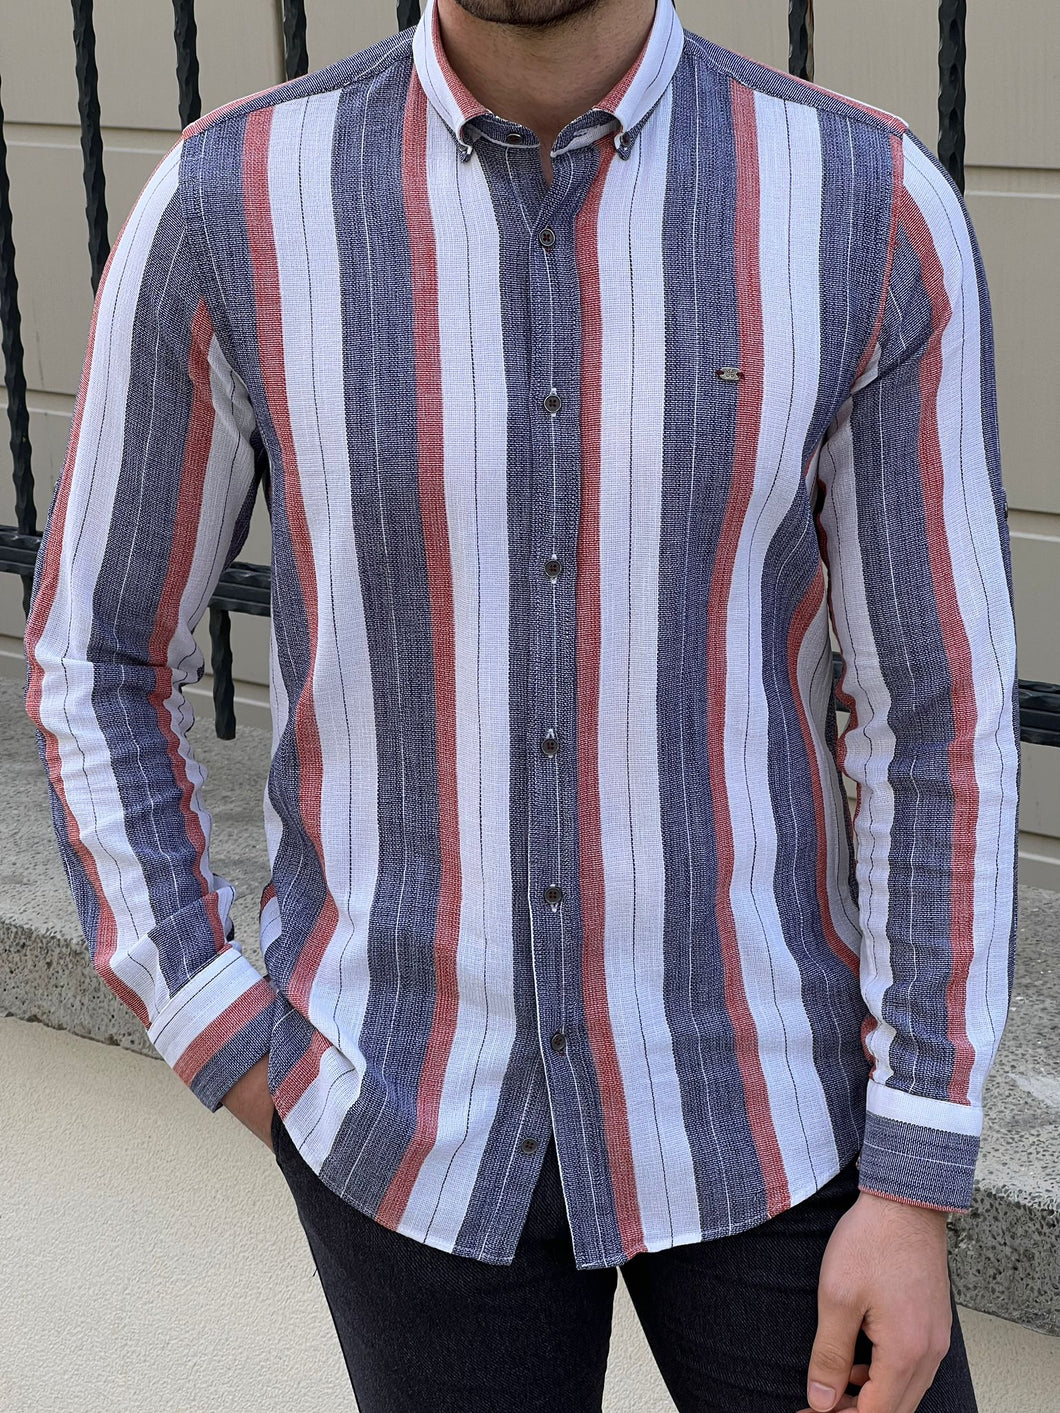 Ben Slim Fit High Quality Foldable Sleeve Navy Shirt